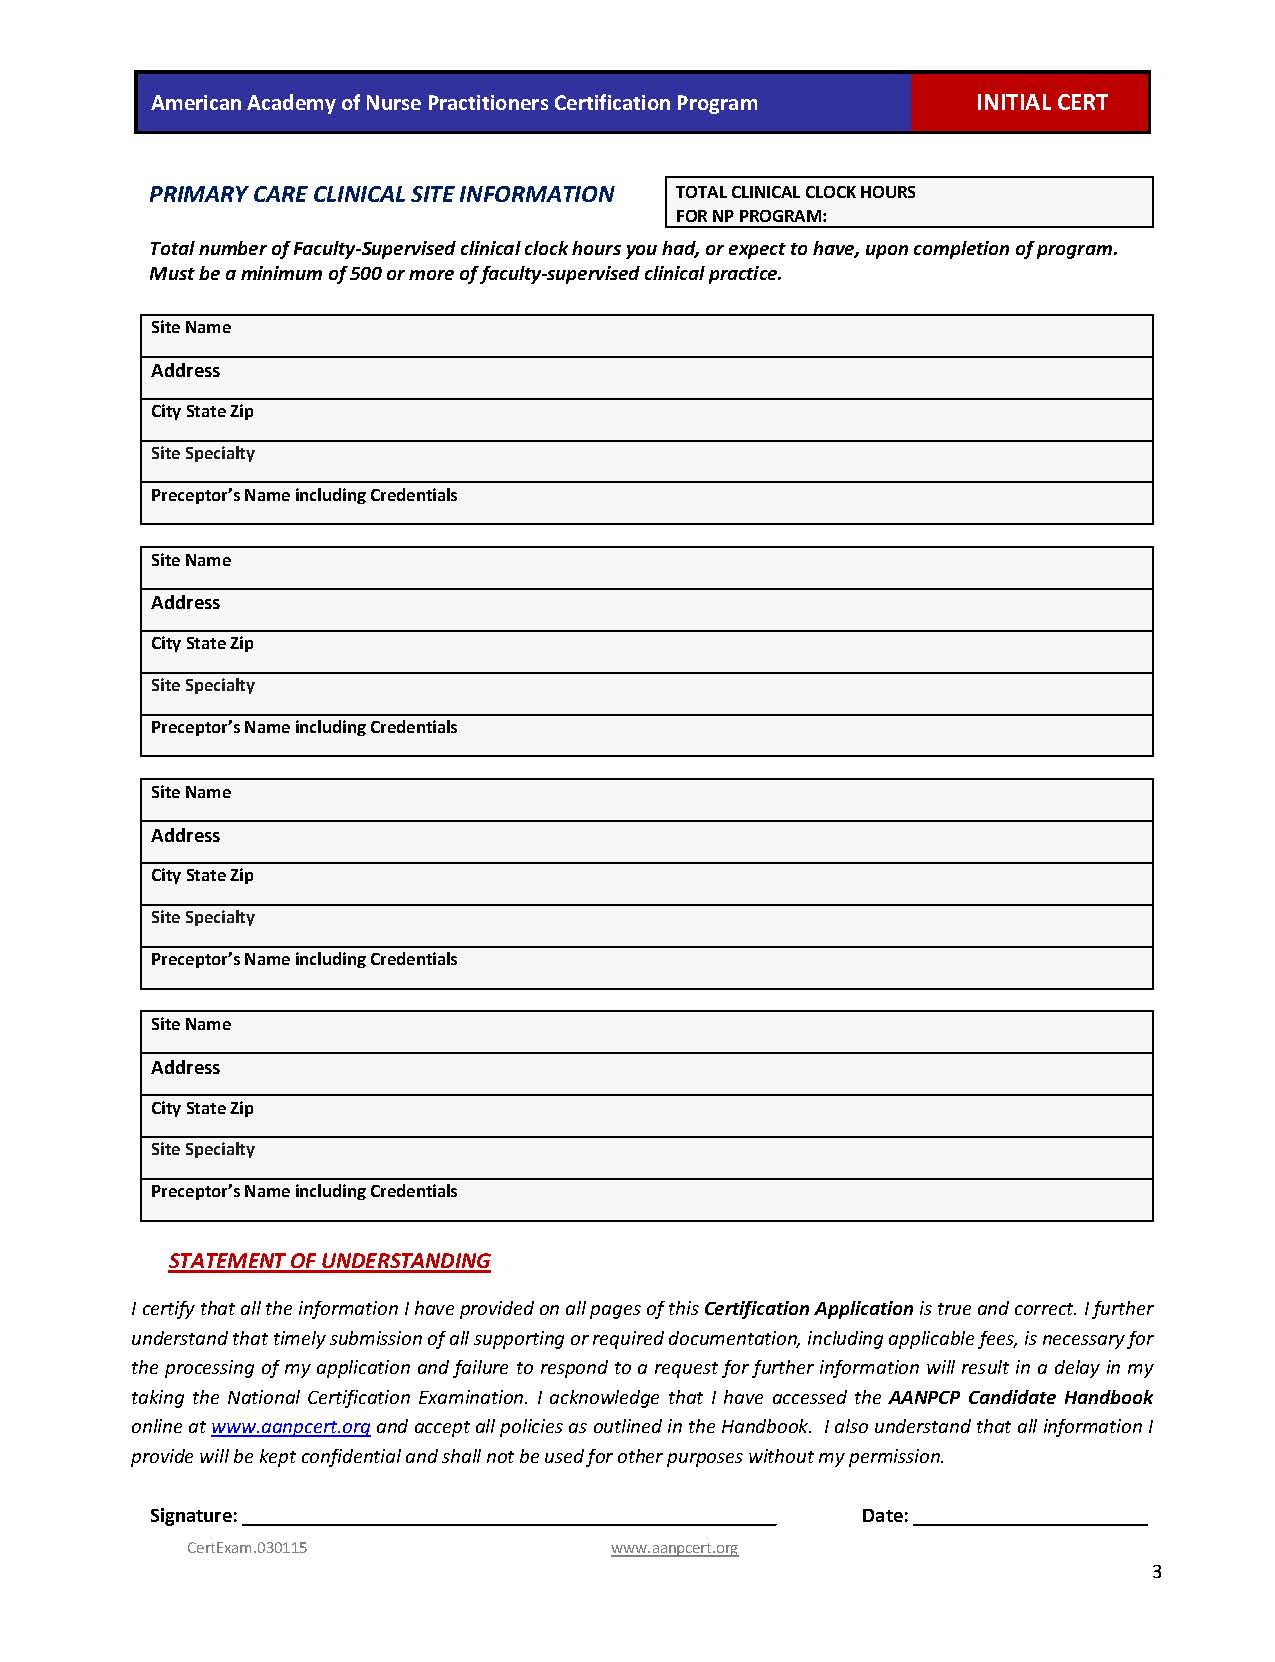 AANP Certification Exam App_Page_3.jpg